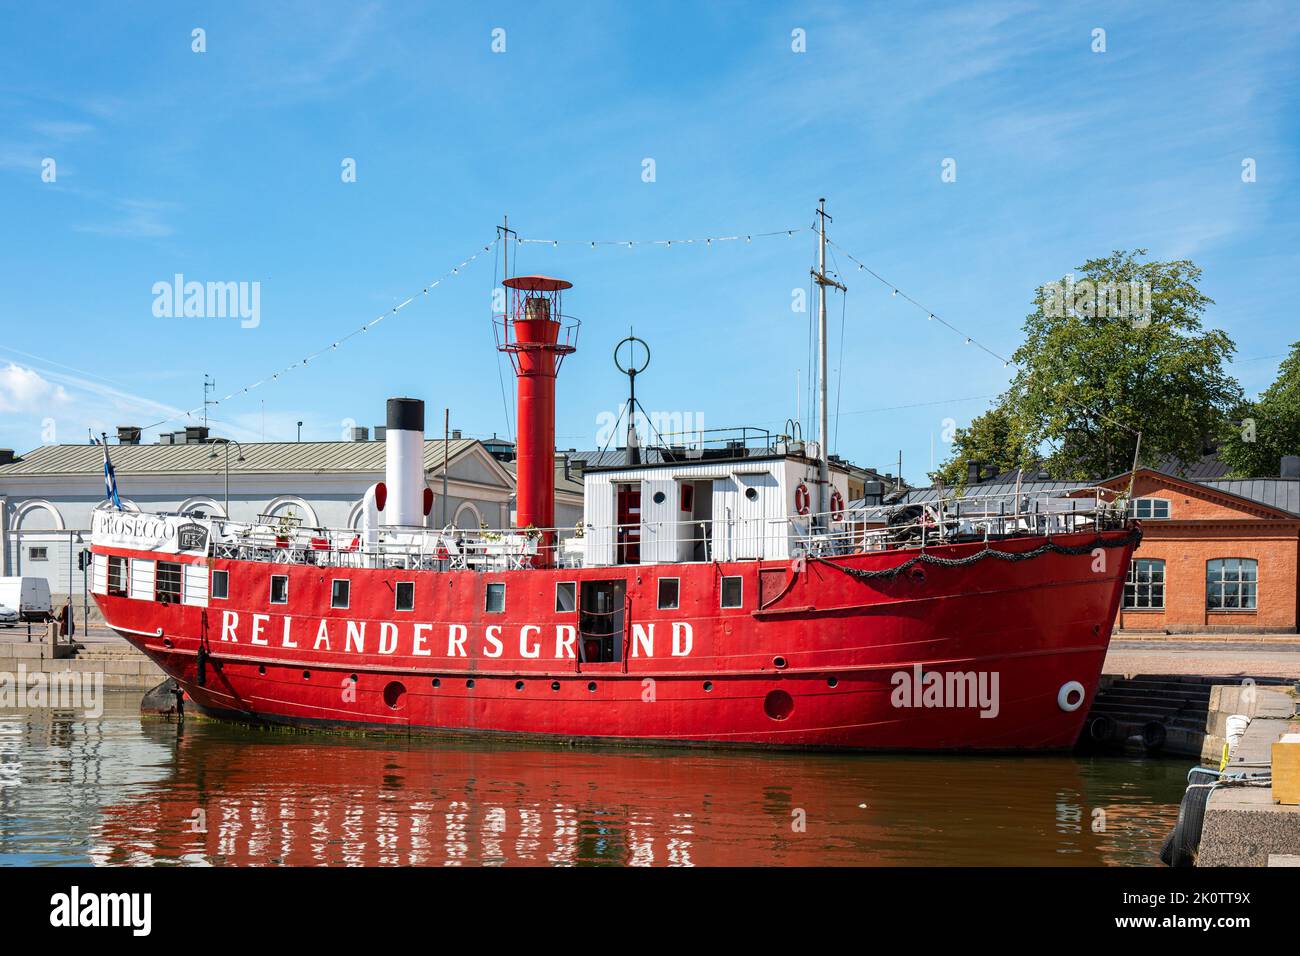 Restaurant ship Relandergrund, formerly a lightvessel, moored in Kruununhaka district of Helsinki, Finland Stock Photo